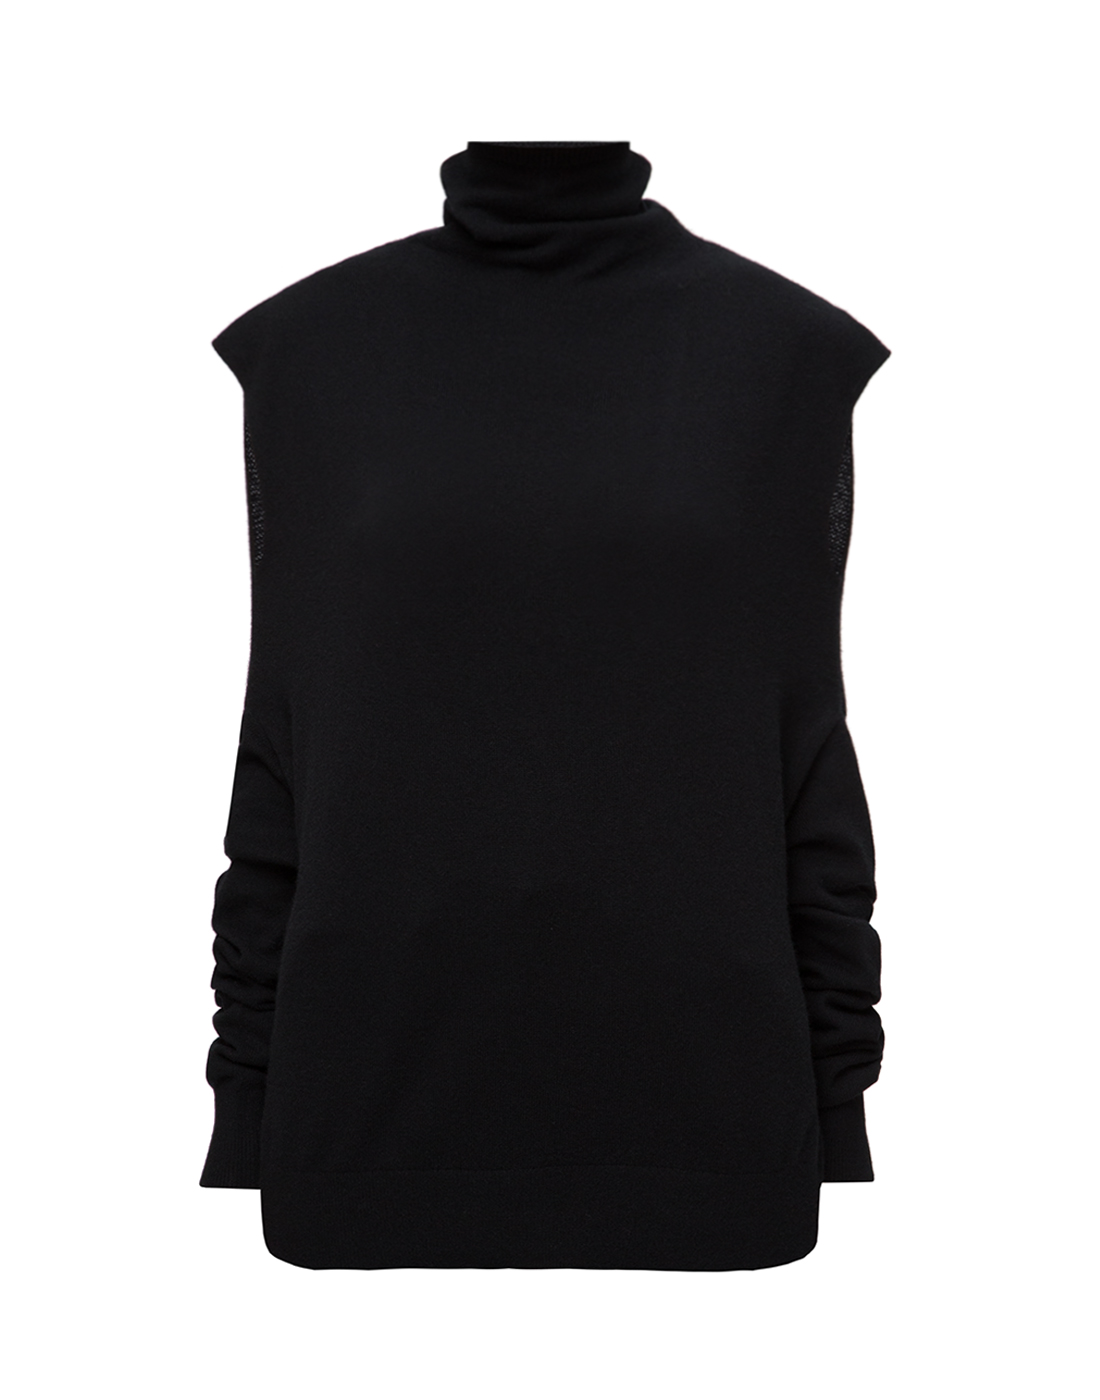 Жіночий чорний светр-трансформер-1